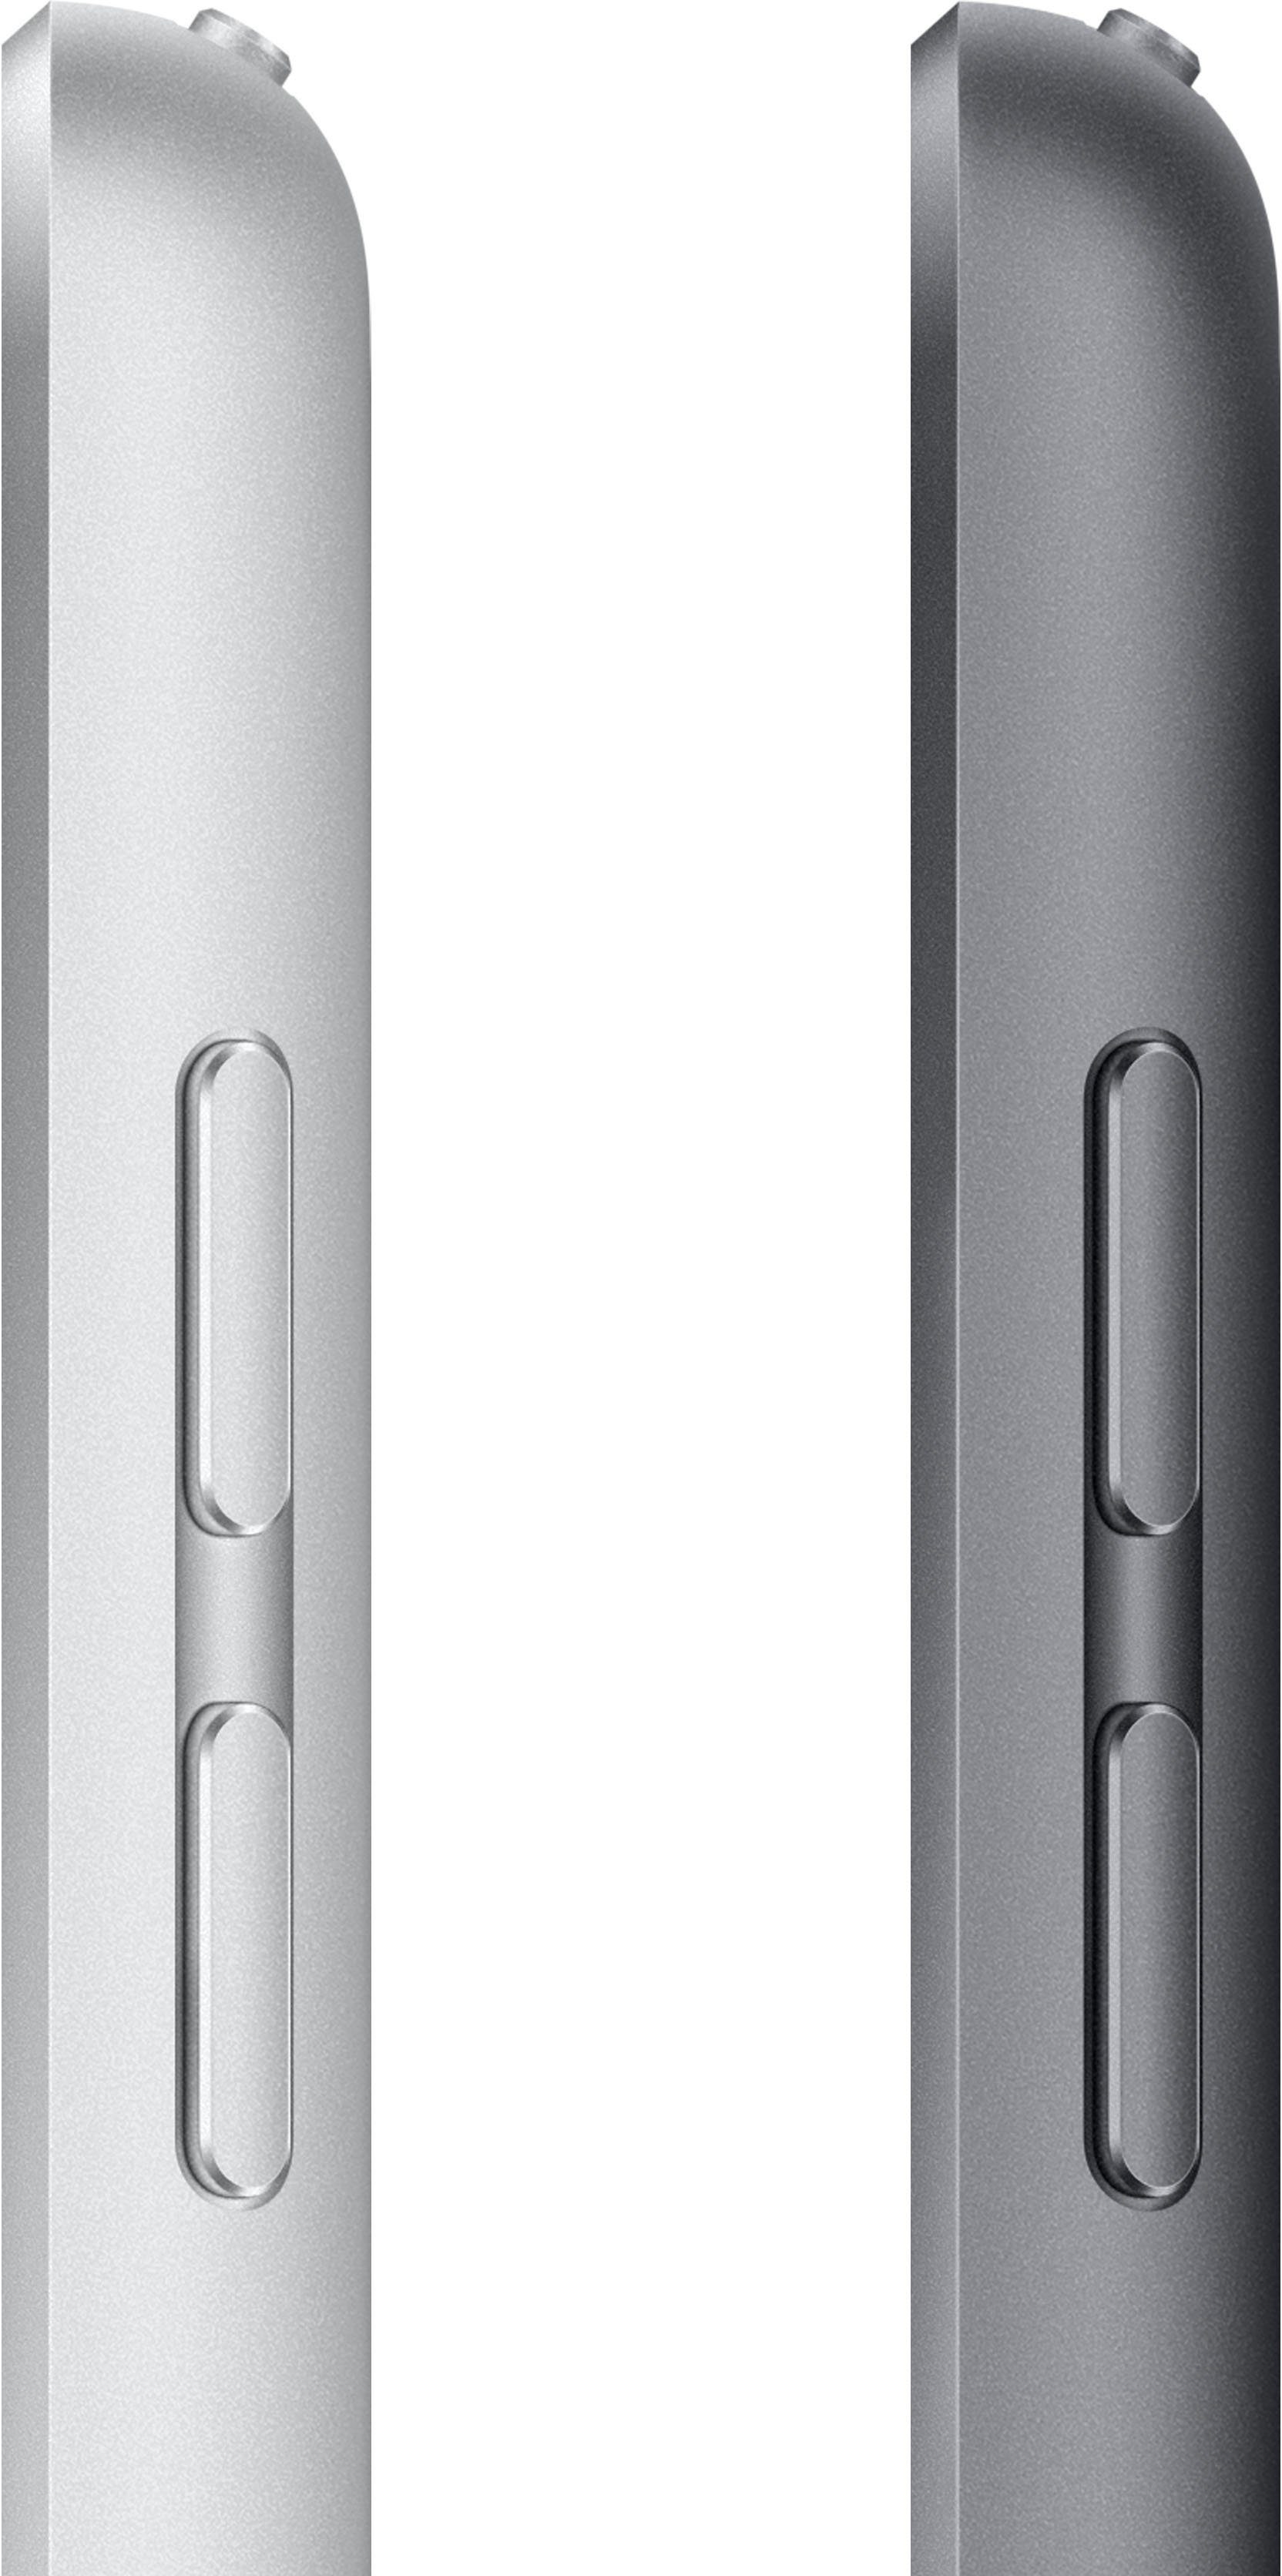 Apple Cellular GB, Tablet 256 (2021) 10.2" Wi-Fi (LTE) + Silver 4G iPadOS, (10,2", iPad